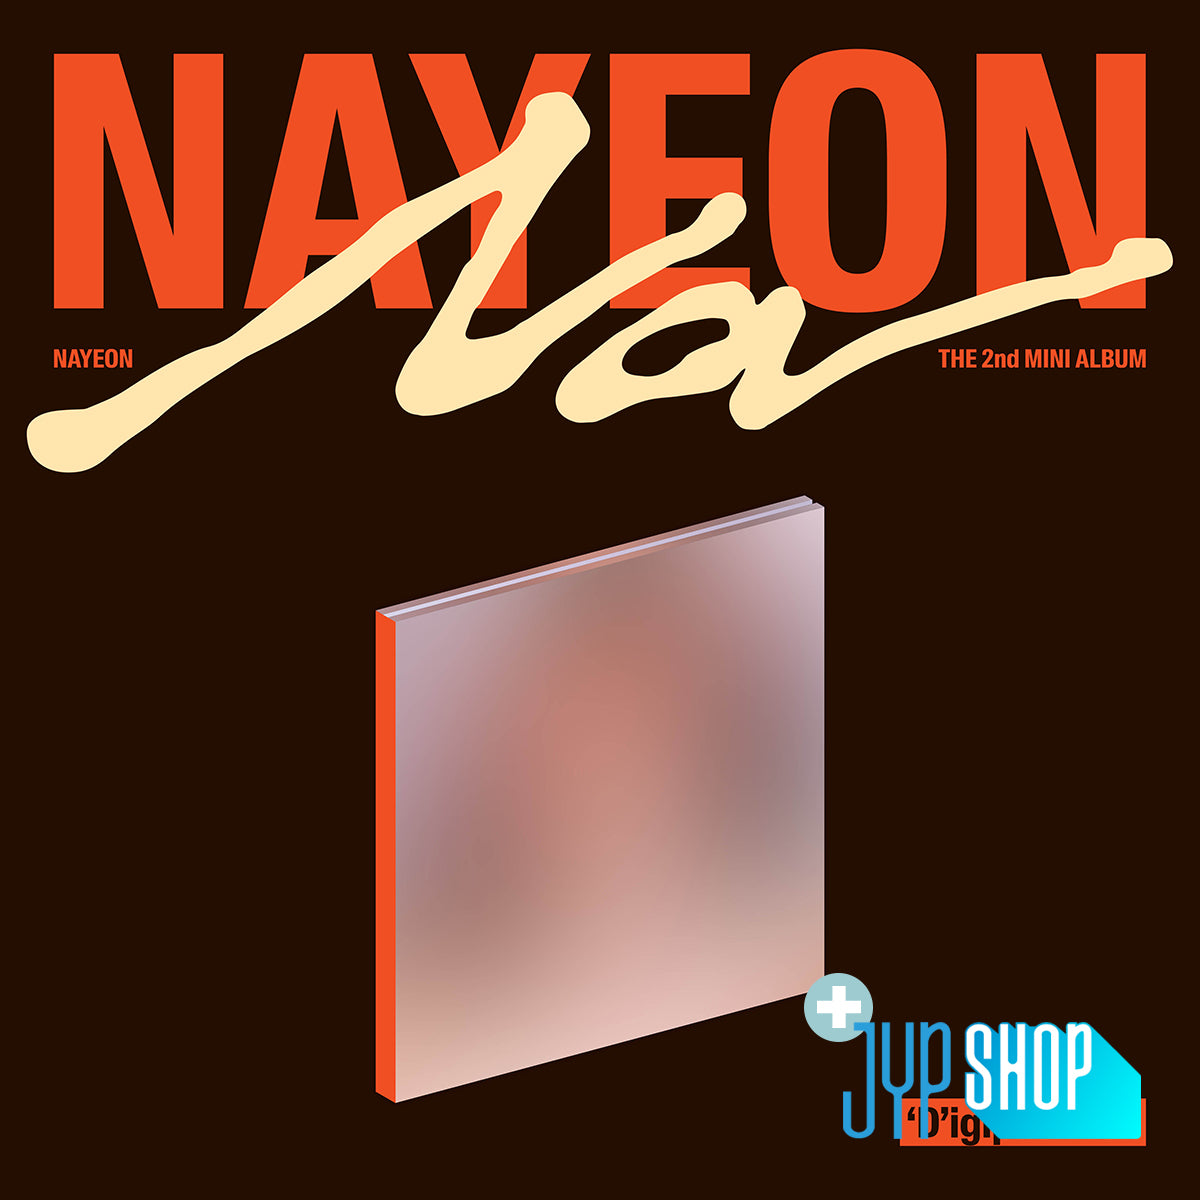 NAYEON (TWICE) - NA (Digipack Ver.) + JYP SHOP P.O.B [PRE-ORDER]